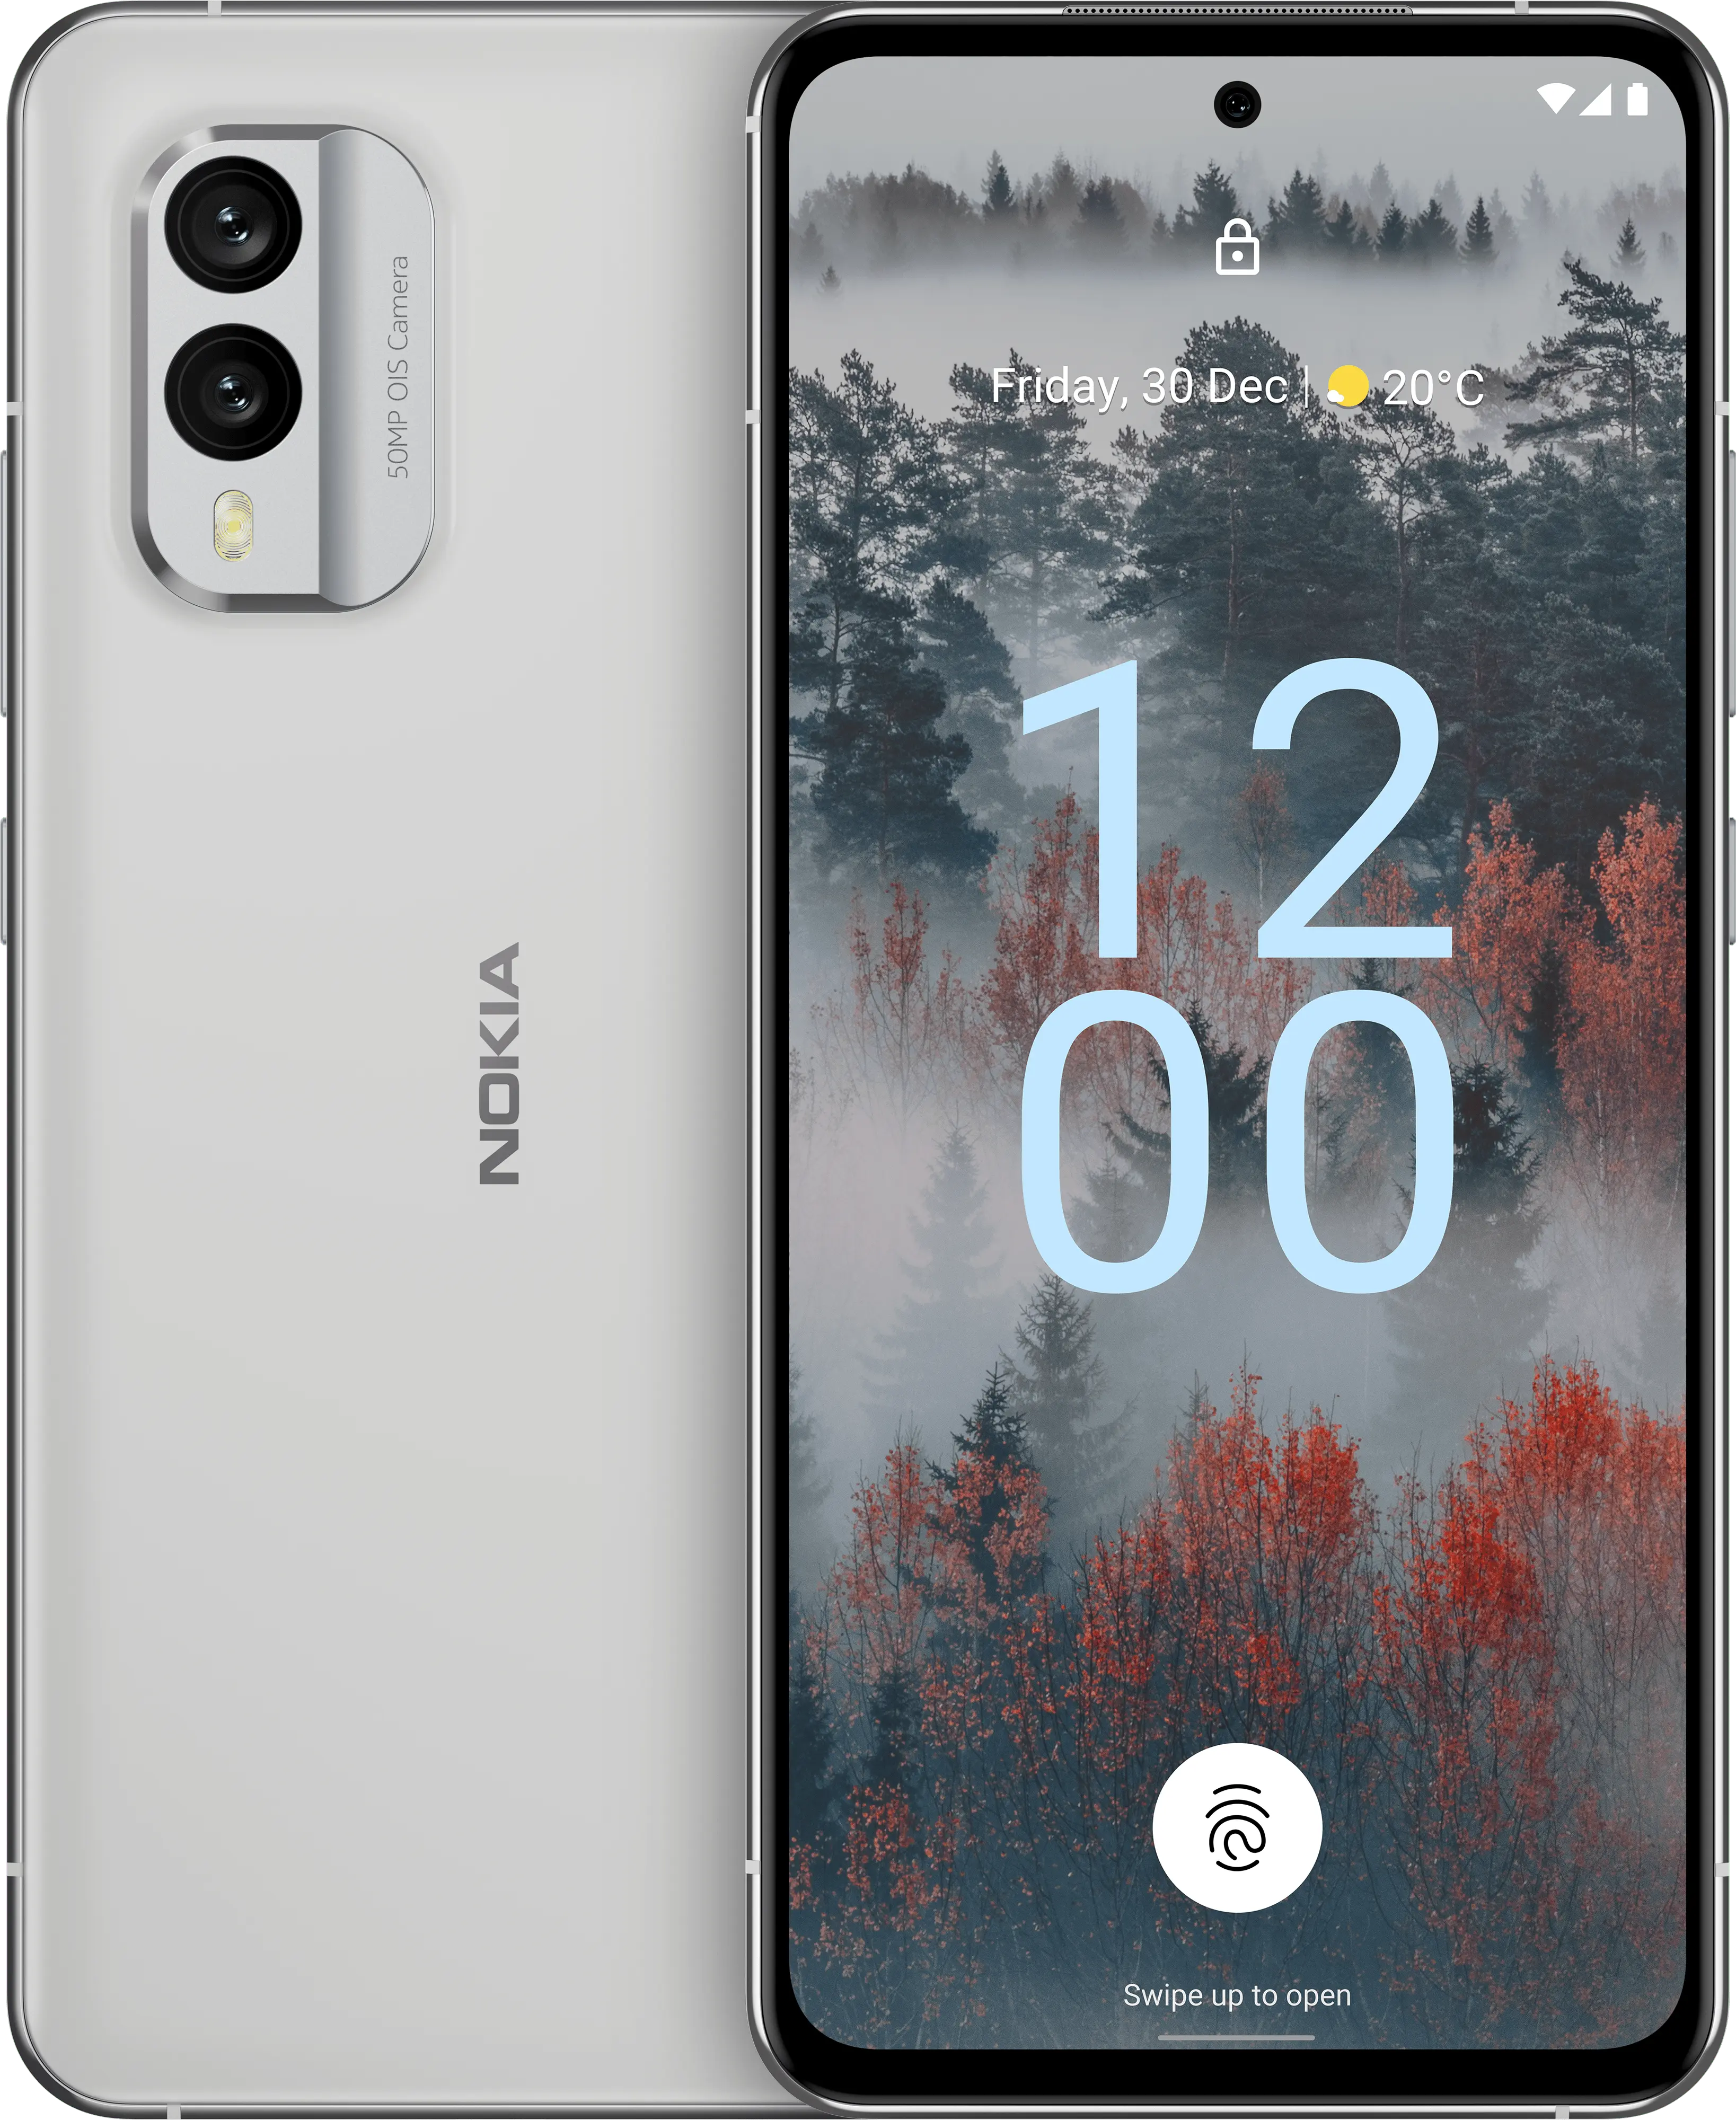 Nokia X30 image